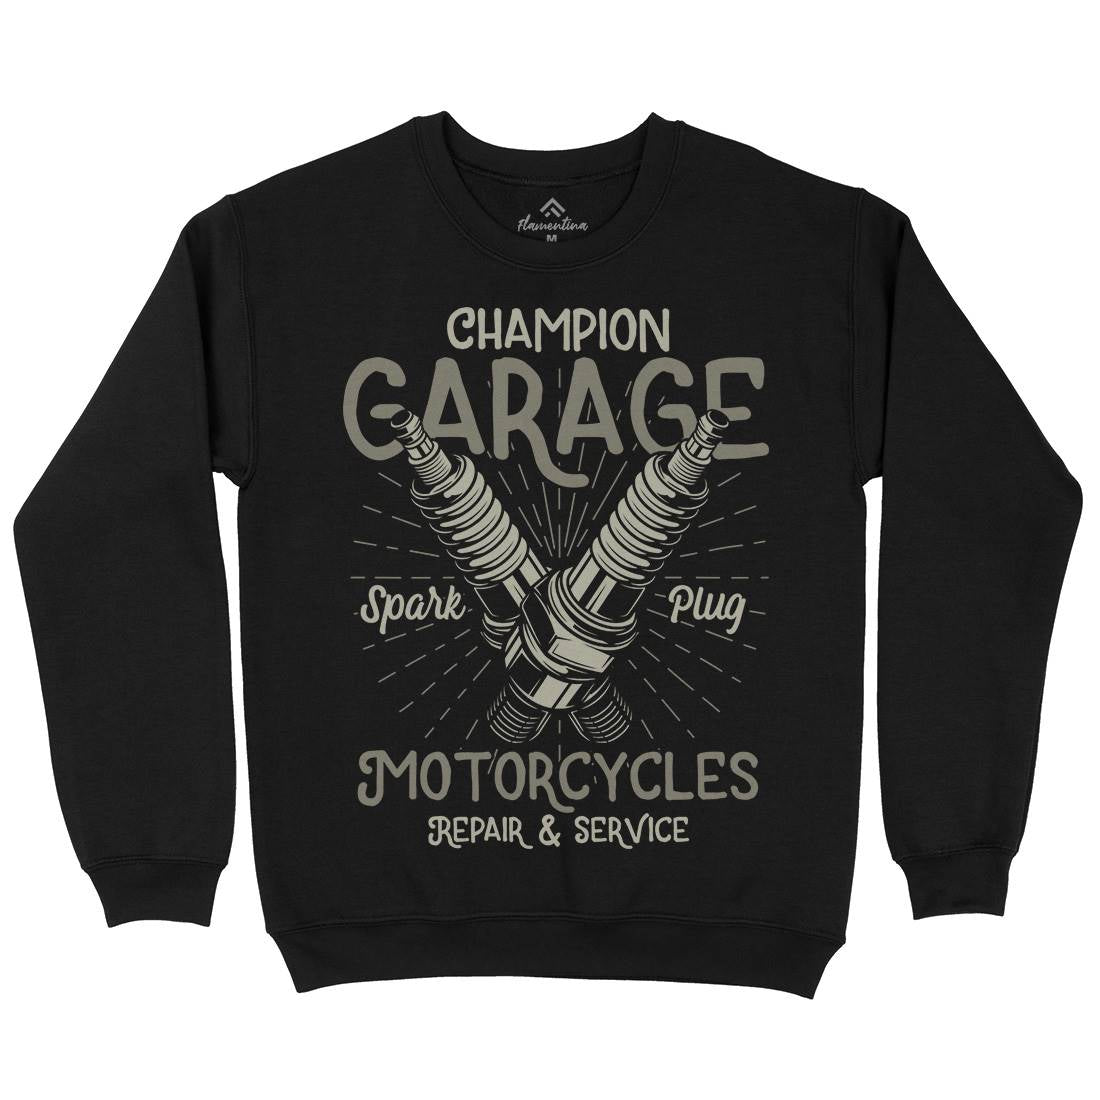 Champion Garage Mens Crew Neck Sweatshirt Motorcycles B835